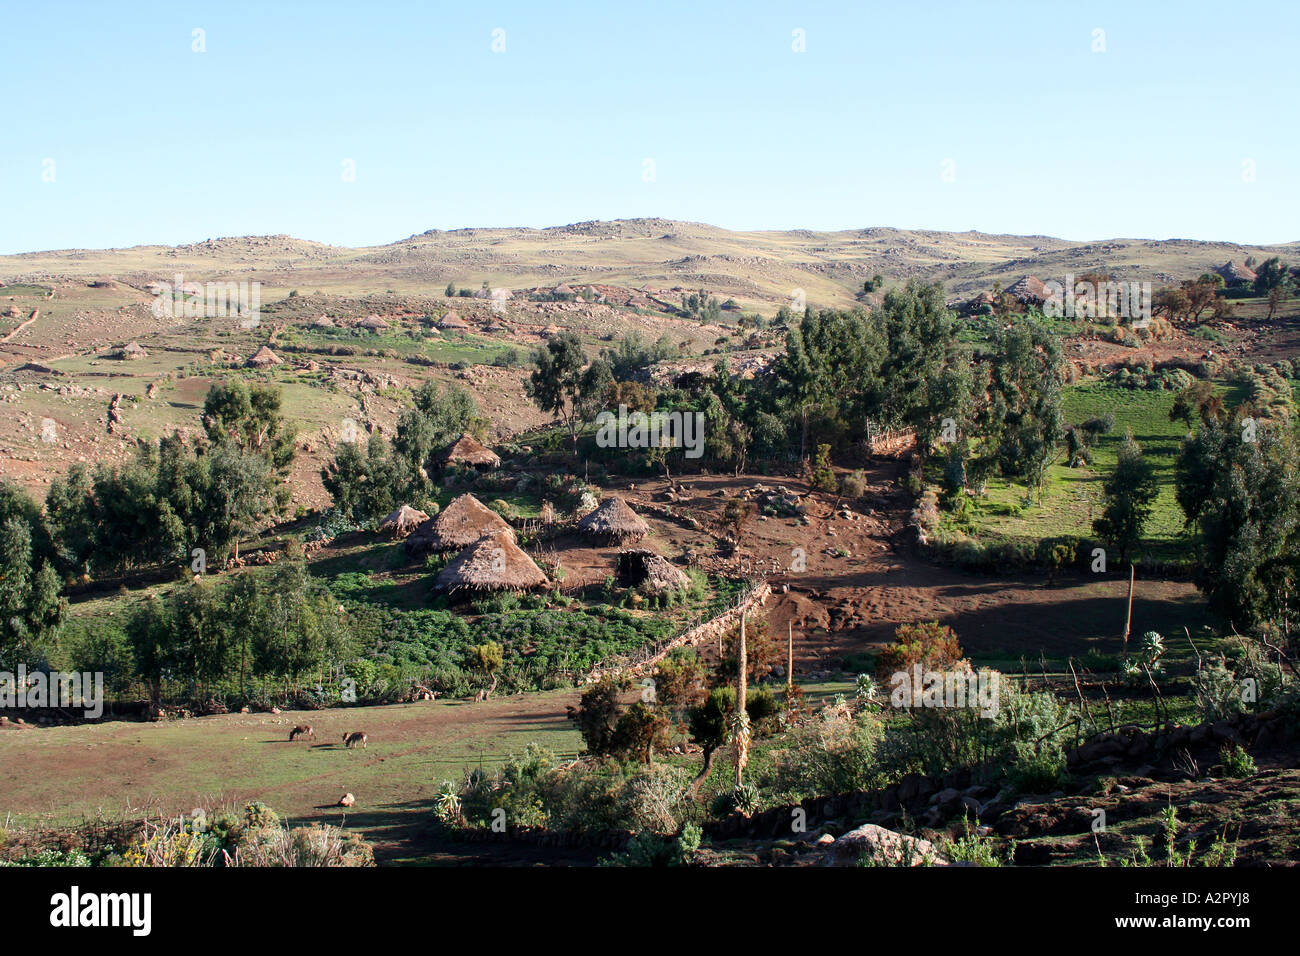 Rural area in the Simien Mountains, Ethiopia Stock Photo